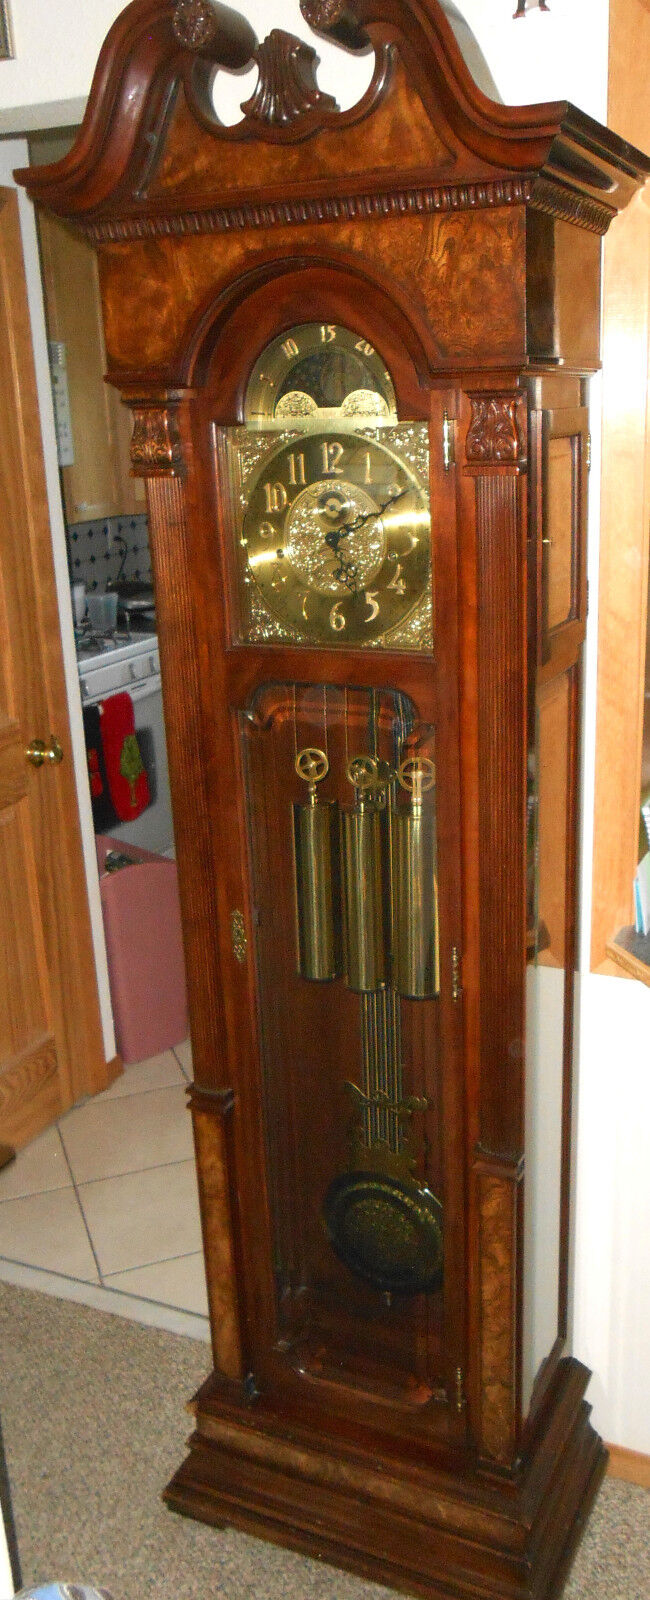 Vintage Charles R. Sligh Clocks Grandfather Clock - Gorgeous - Works Perfectly